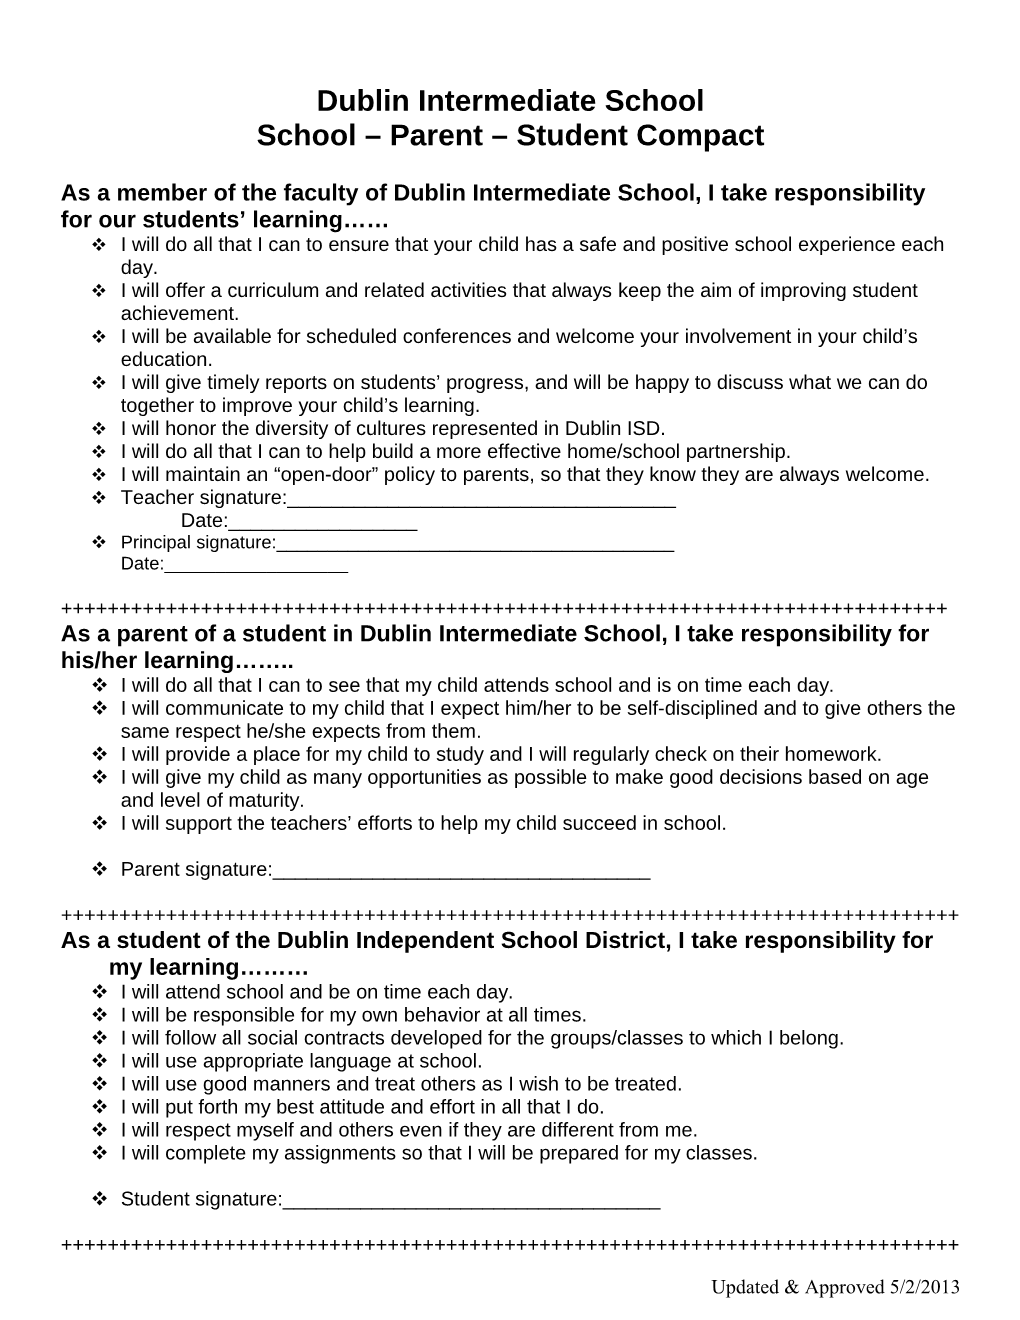 Dublin Independent School District